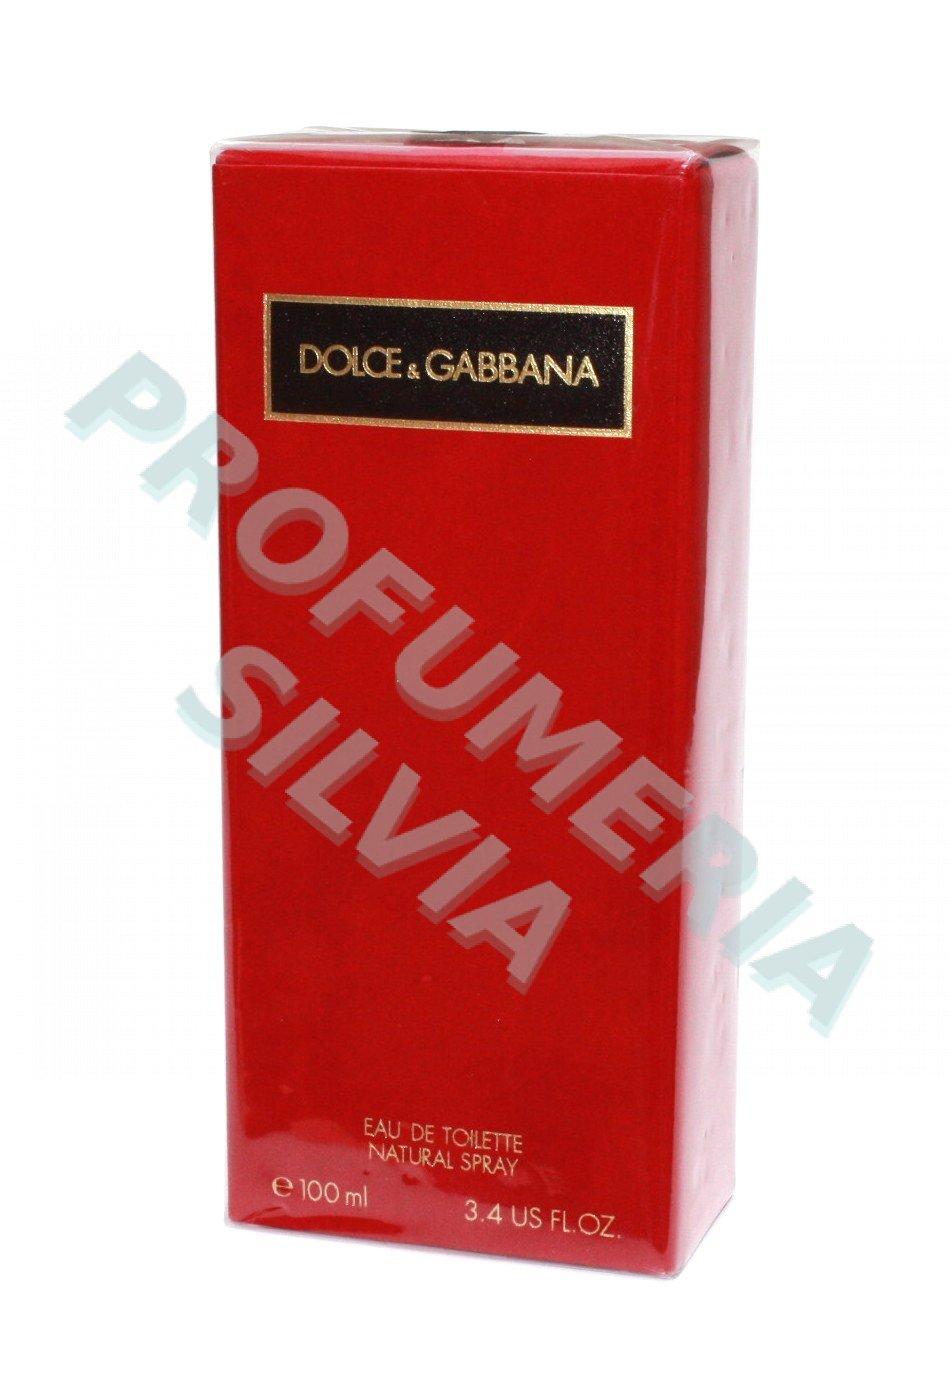 Foto dolce y gabbana (rojo) Dolce & Gabbana